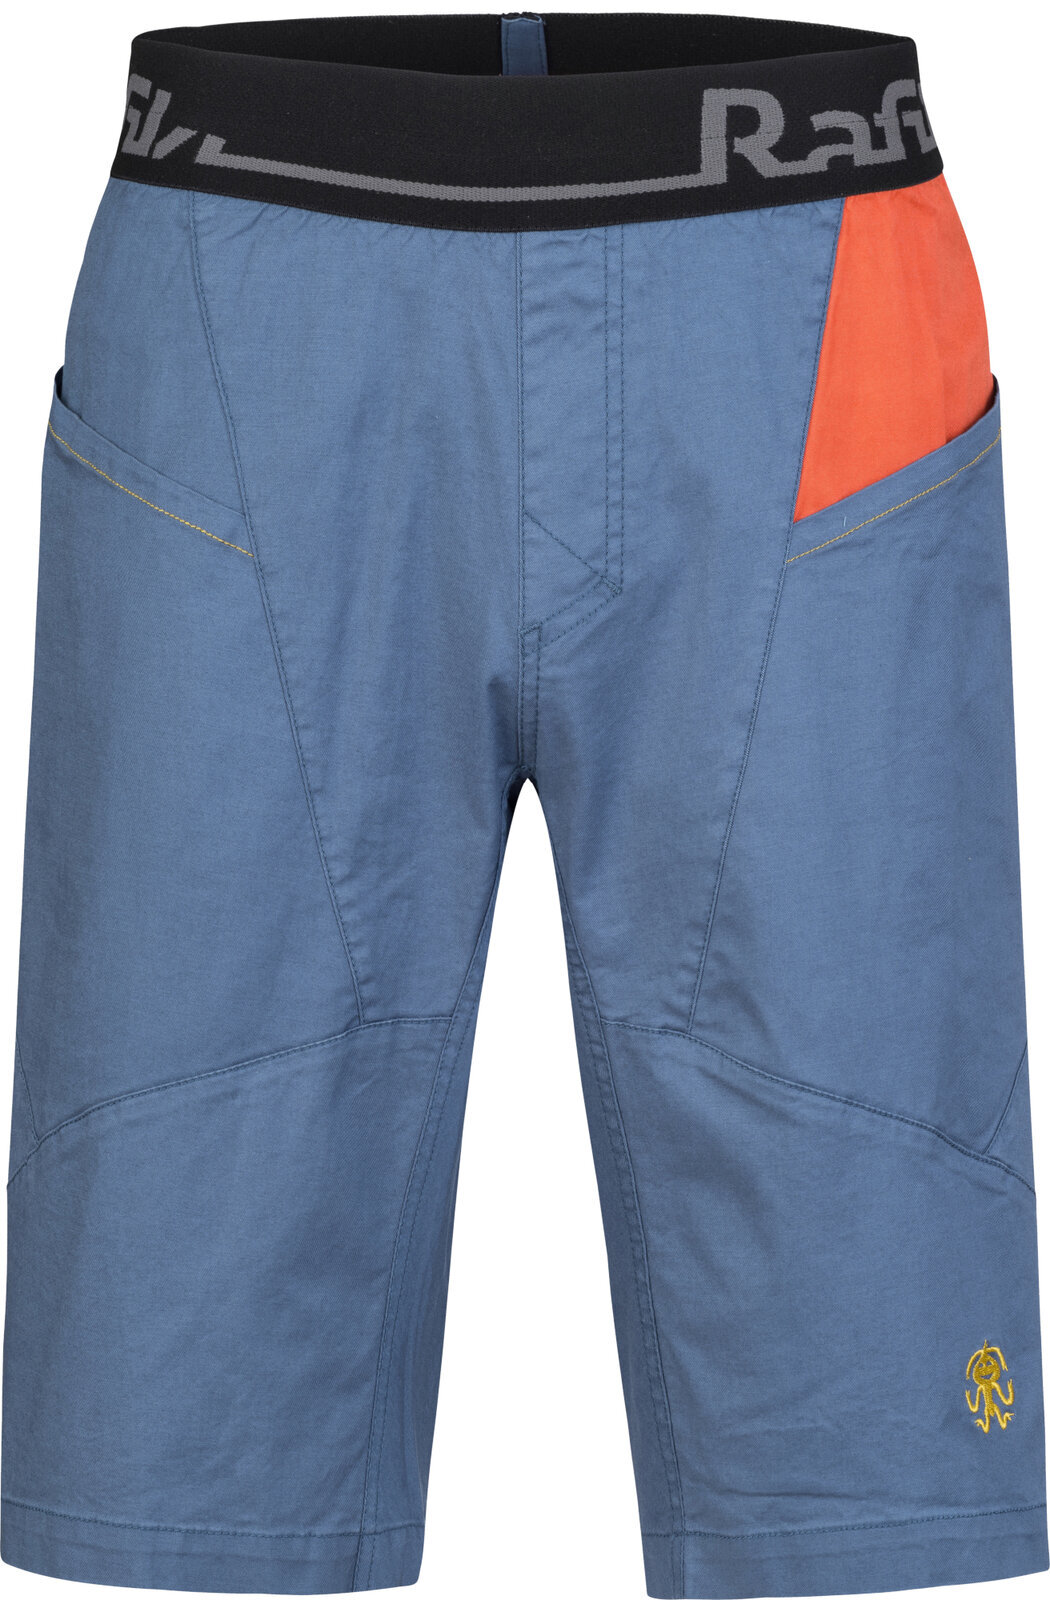 Outdoorshorts Rafiki Megos Man Shorts Ensign Blue/Clay L Outdoorshorts